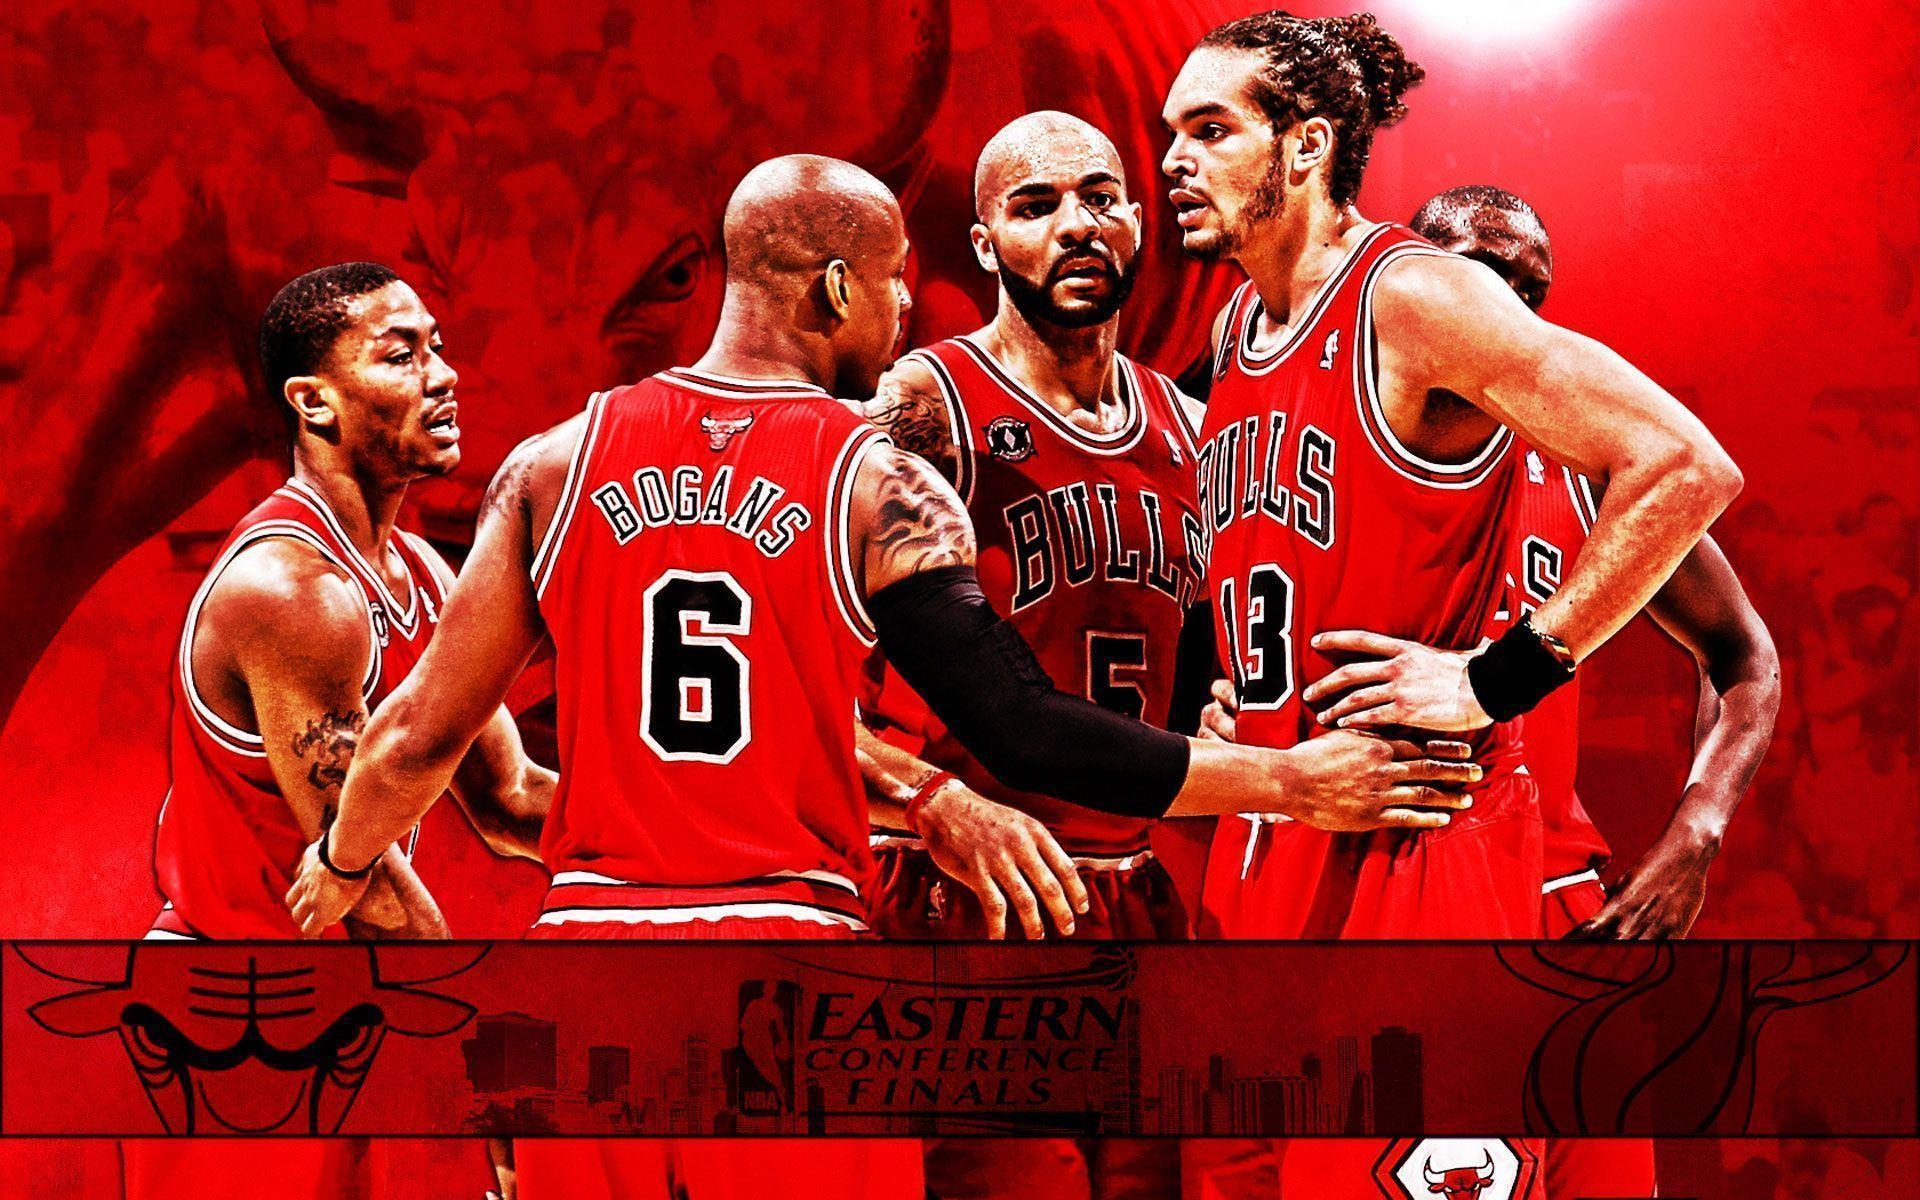 Chicago Bulls 106 199637 High Definition Wallpaper. wallalay